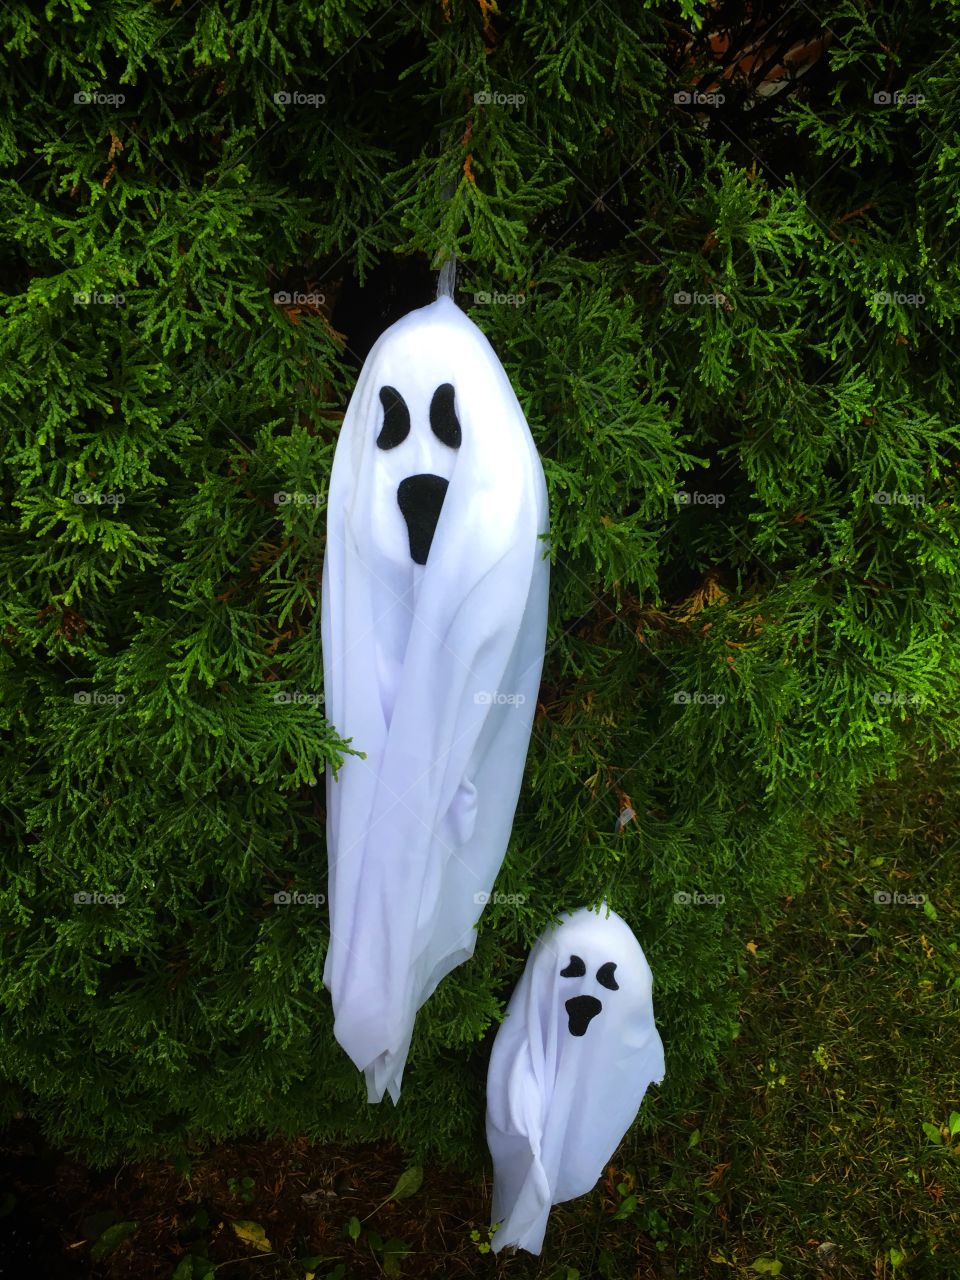 Ghost Halloween decor